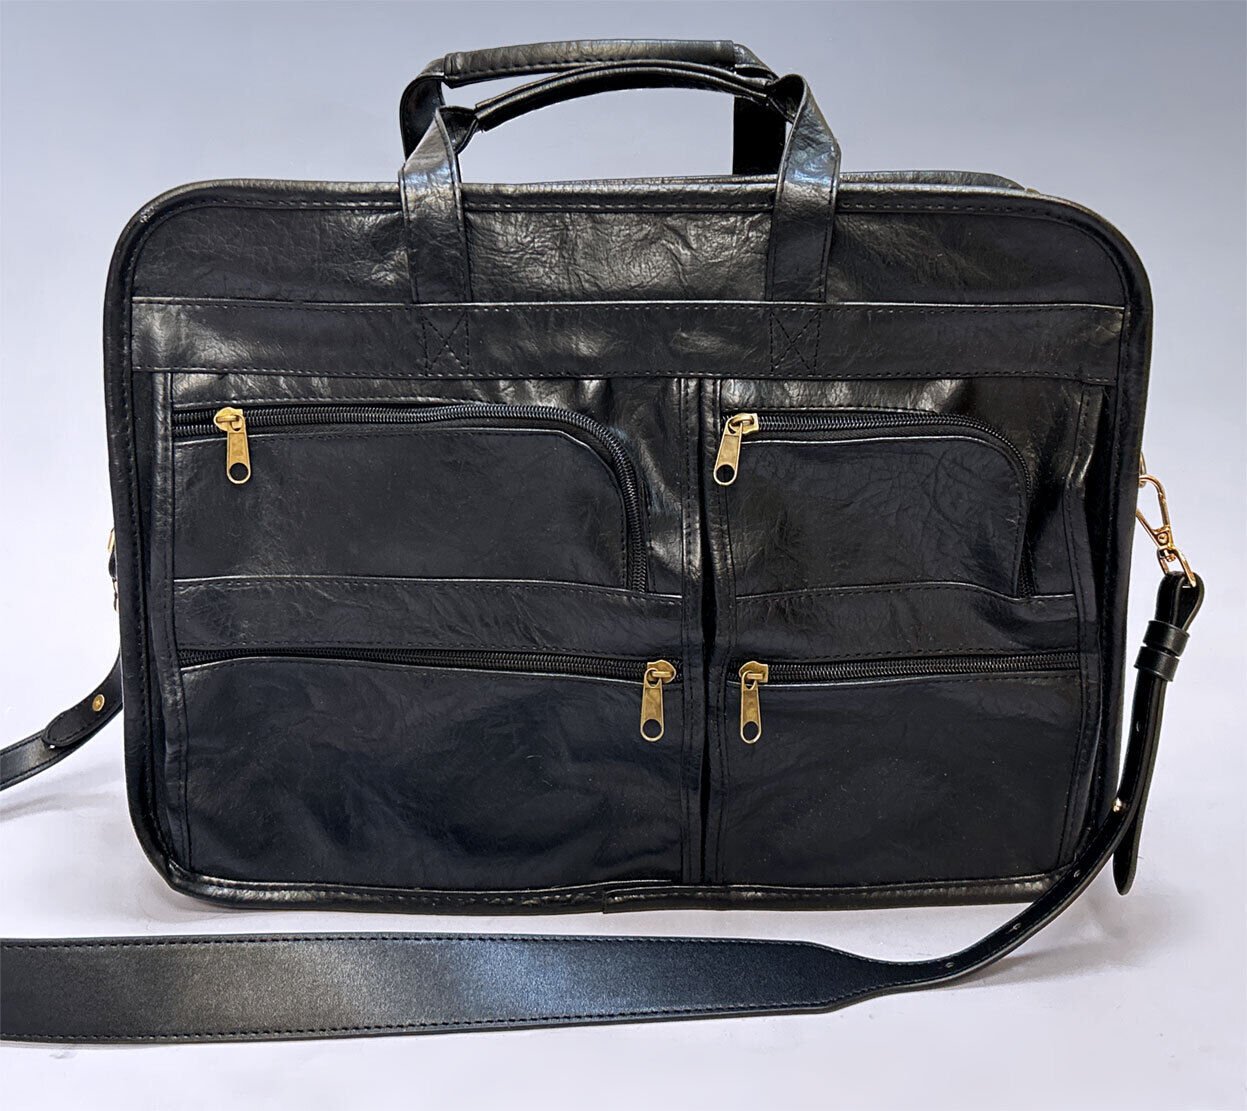 Multi-Pocket Expandable LAPTOP Organizer Bag Black Textured Crushed Leather